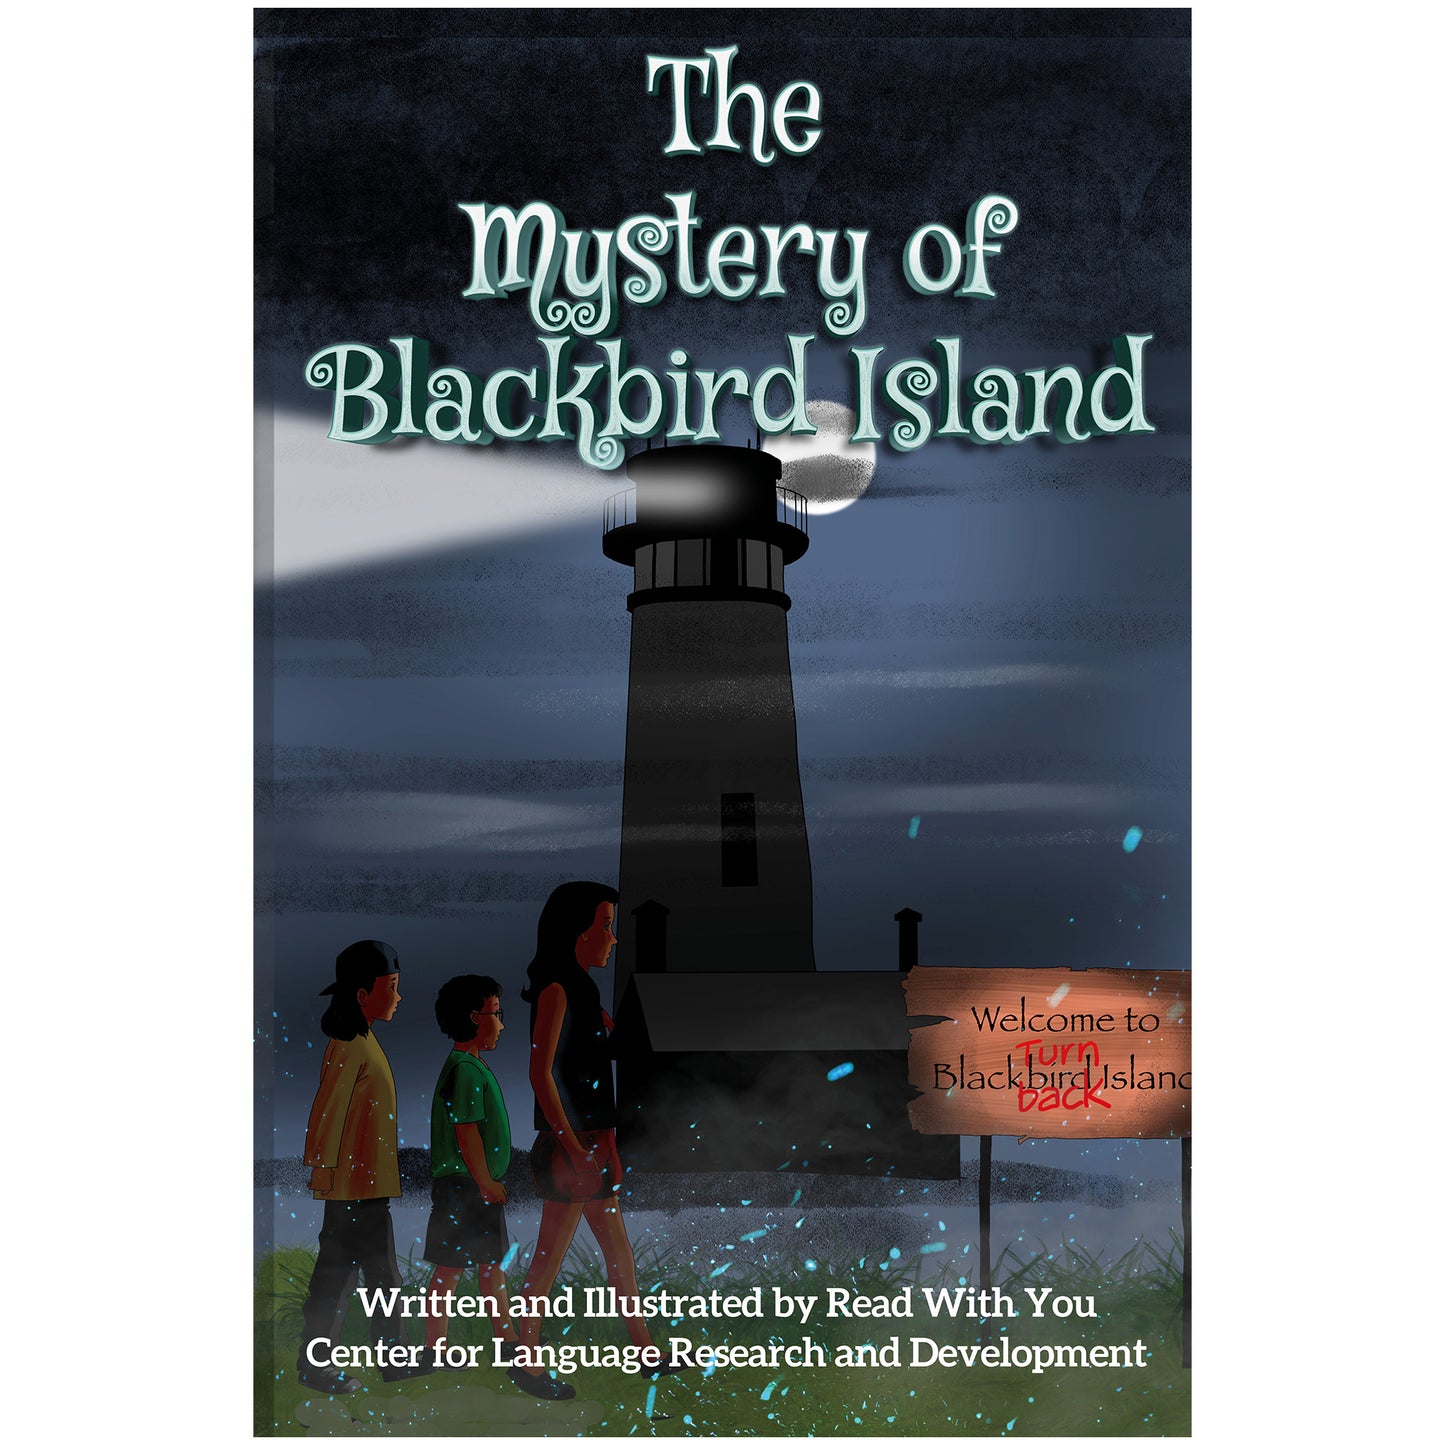 The Mystery of Blackbird Island